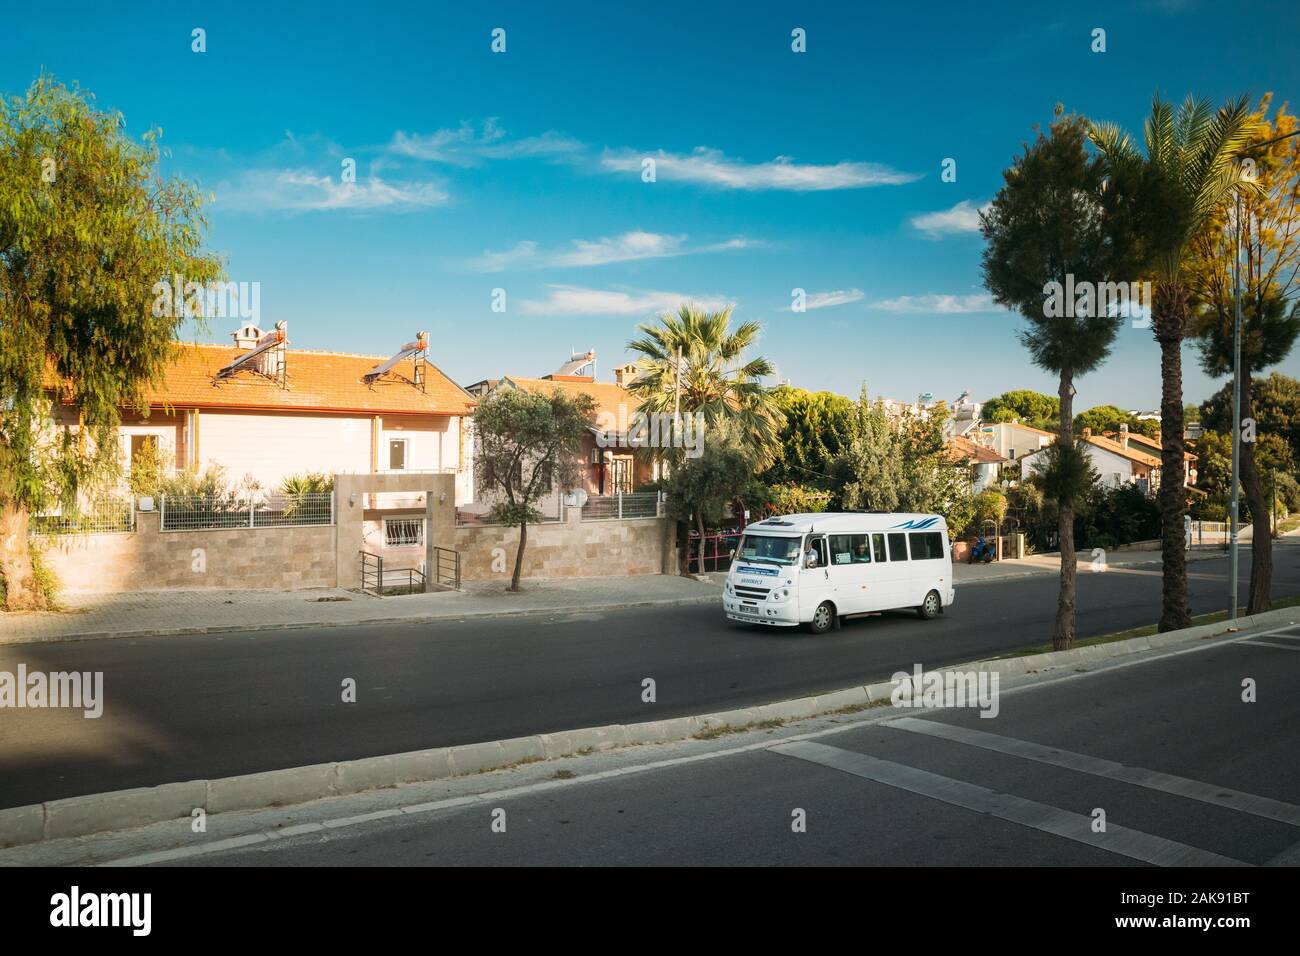 Kusadasi, Ayd n Province, Turkey - September 9, 2019: Urban taxi Minibus driving on street. Stock Photo